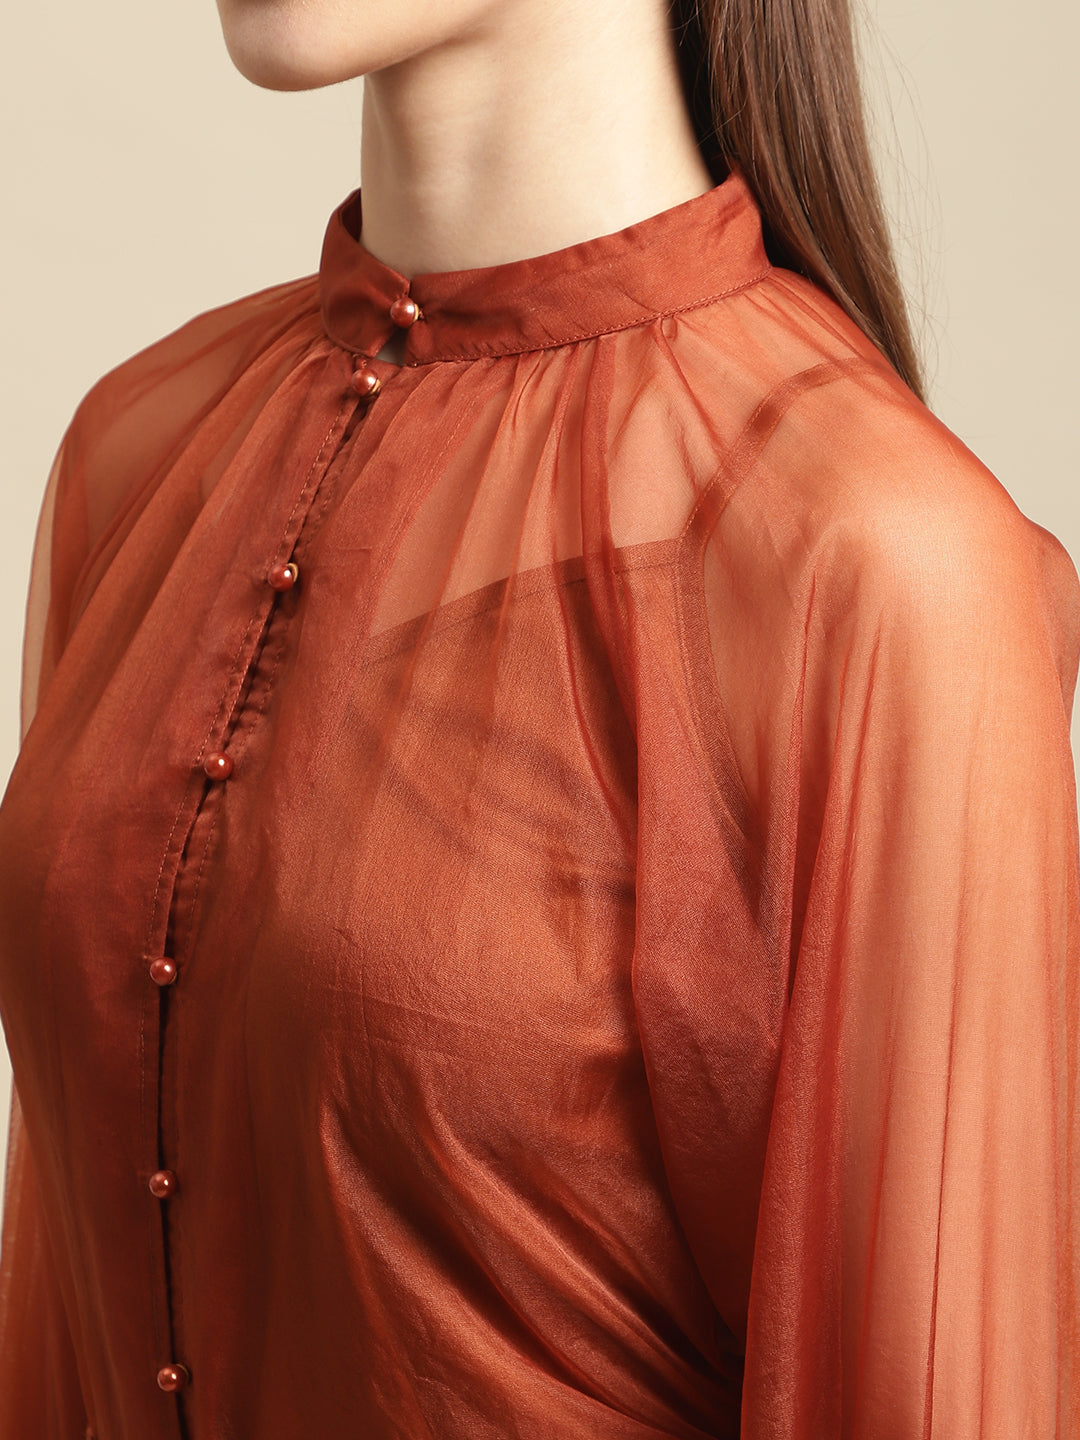 Blanc9 Orange 3Pc Lace Pencil Skirt With Organza Top-B9ST100